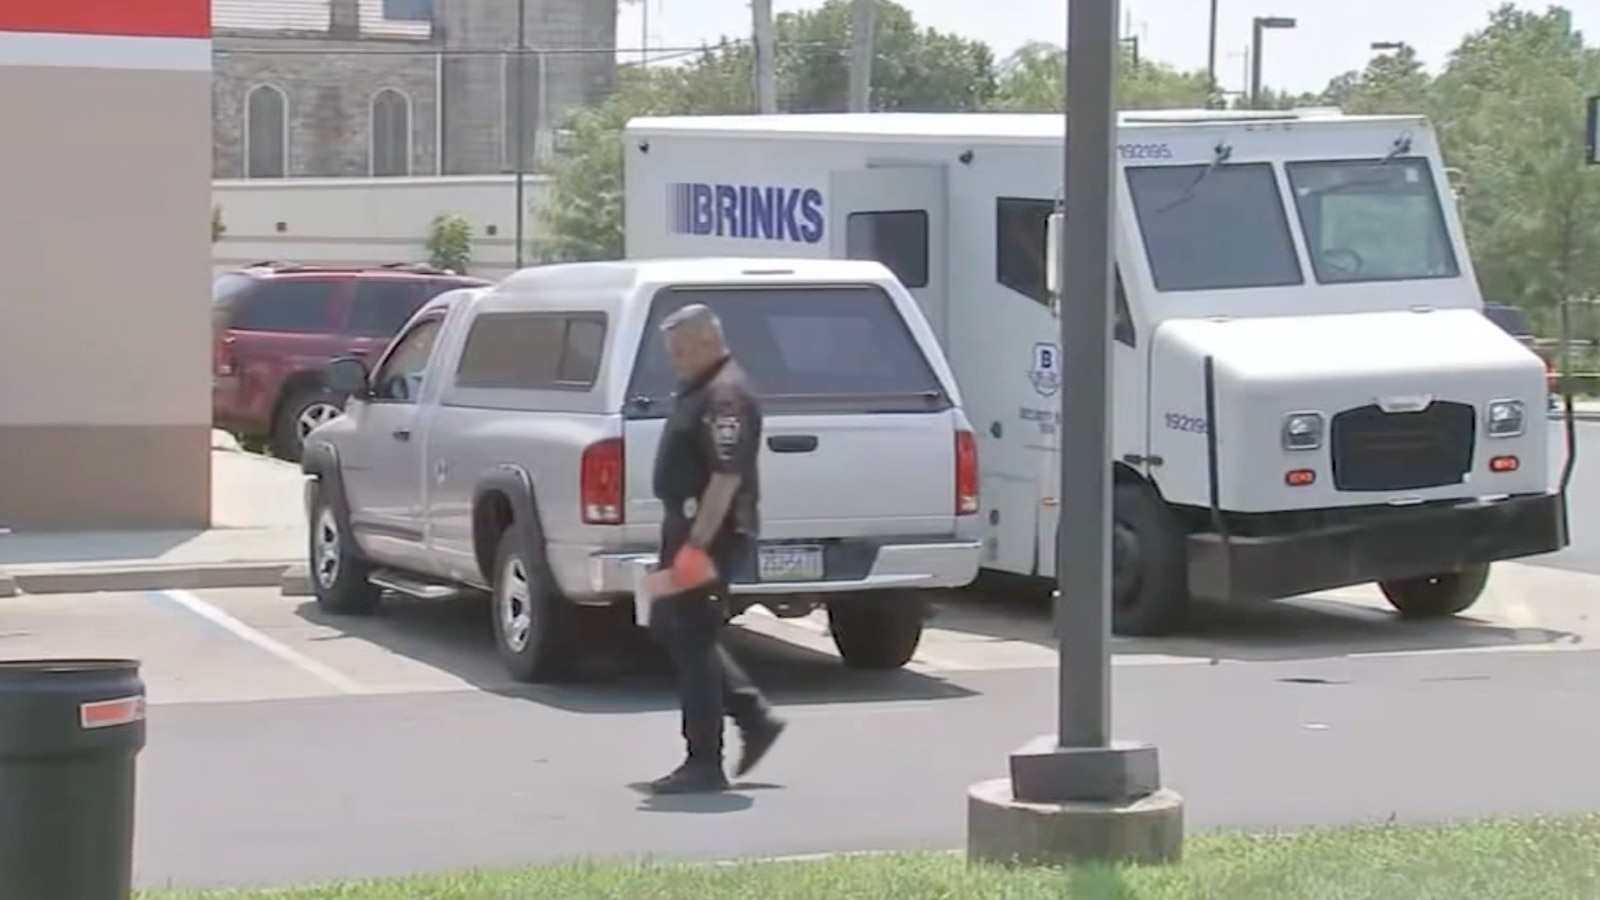 Hundreds of thousands of dollars stolen from armored truck in Philadelphia heist